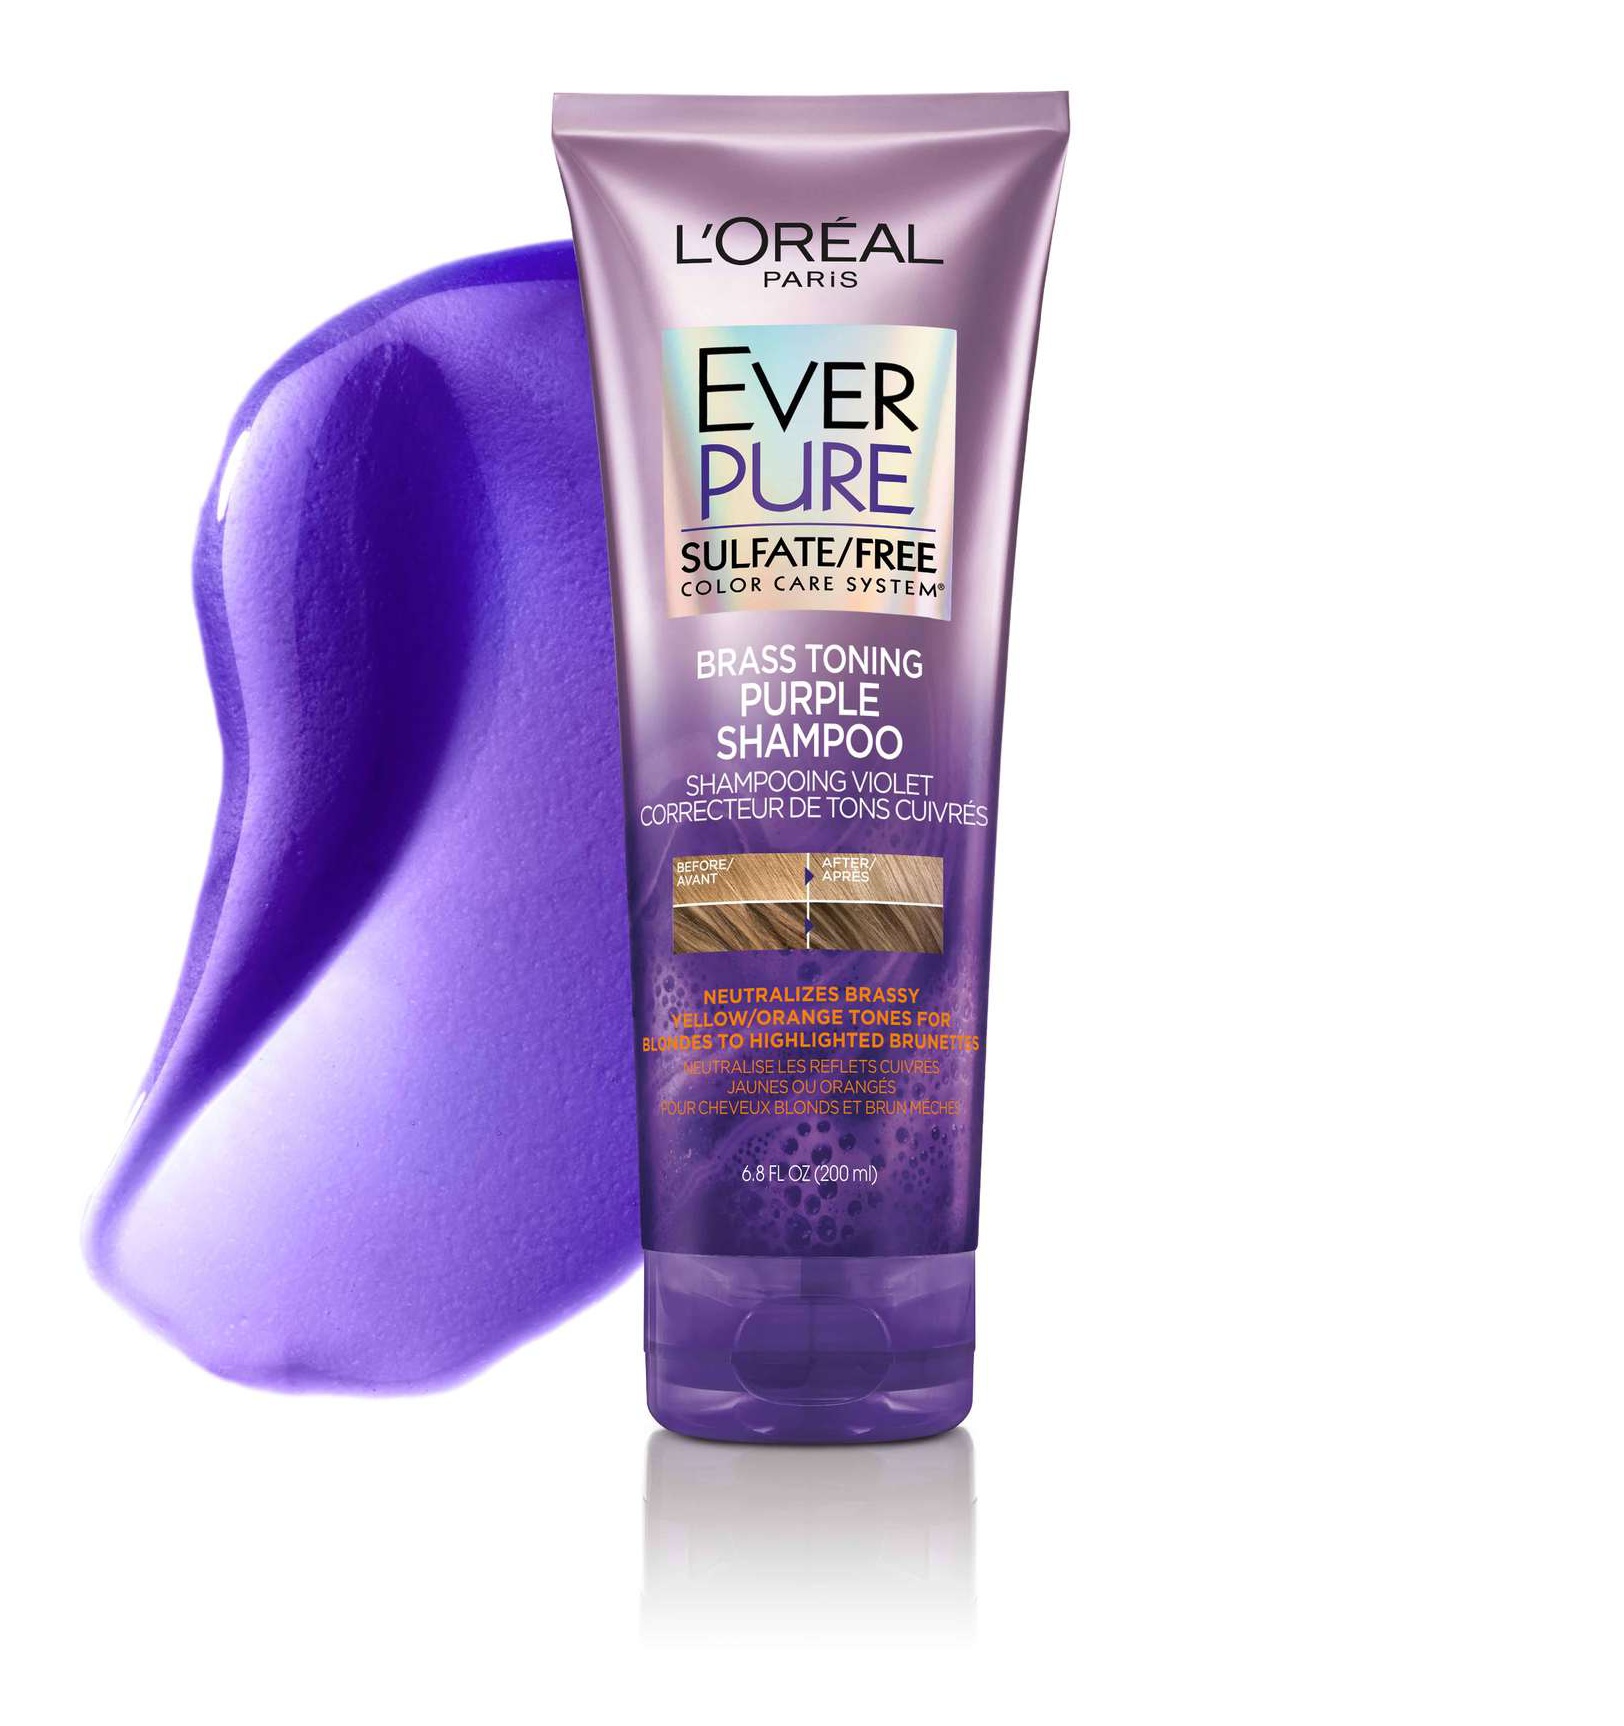 L'Oreal Everpure Sulfate Free Brass Toning Purple Shampoo